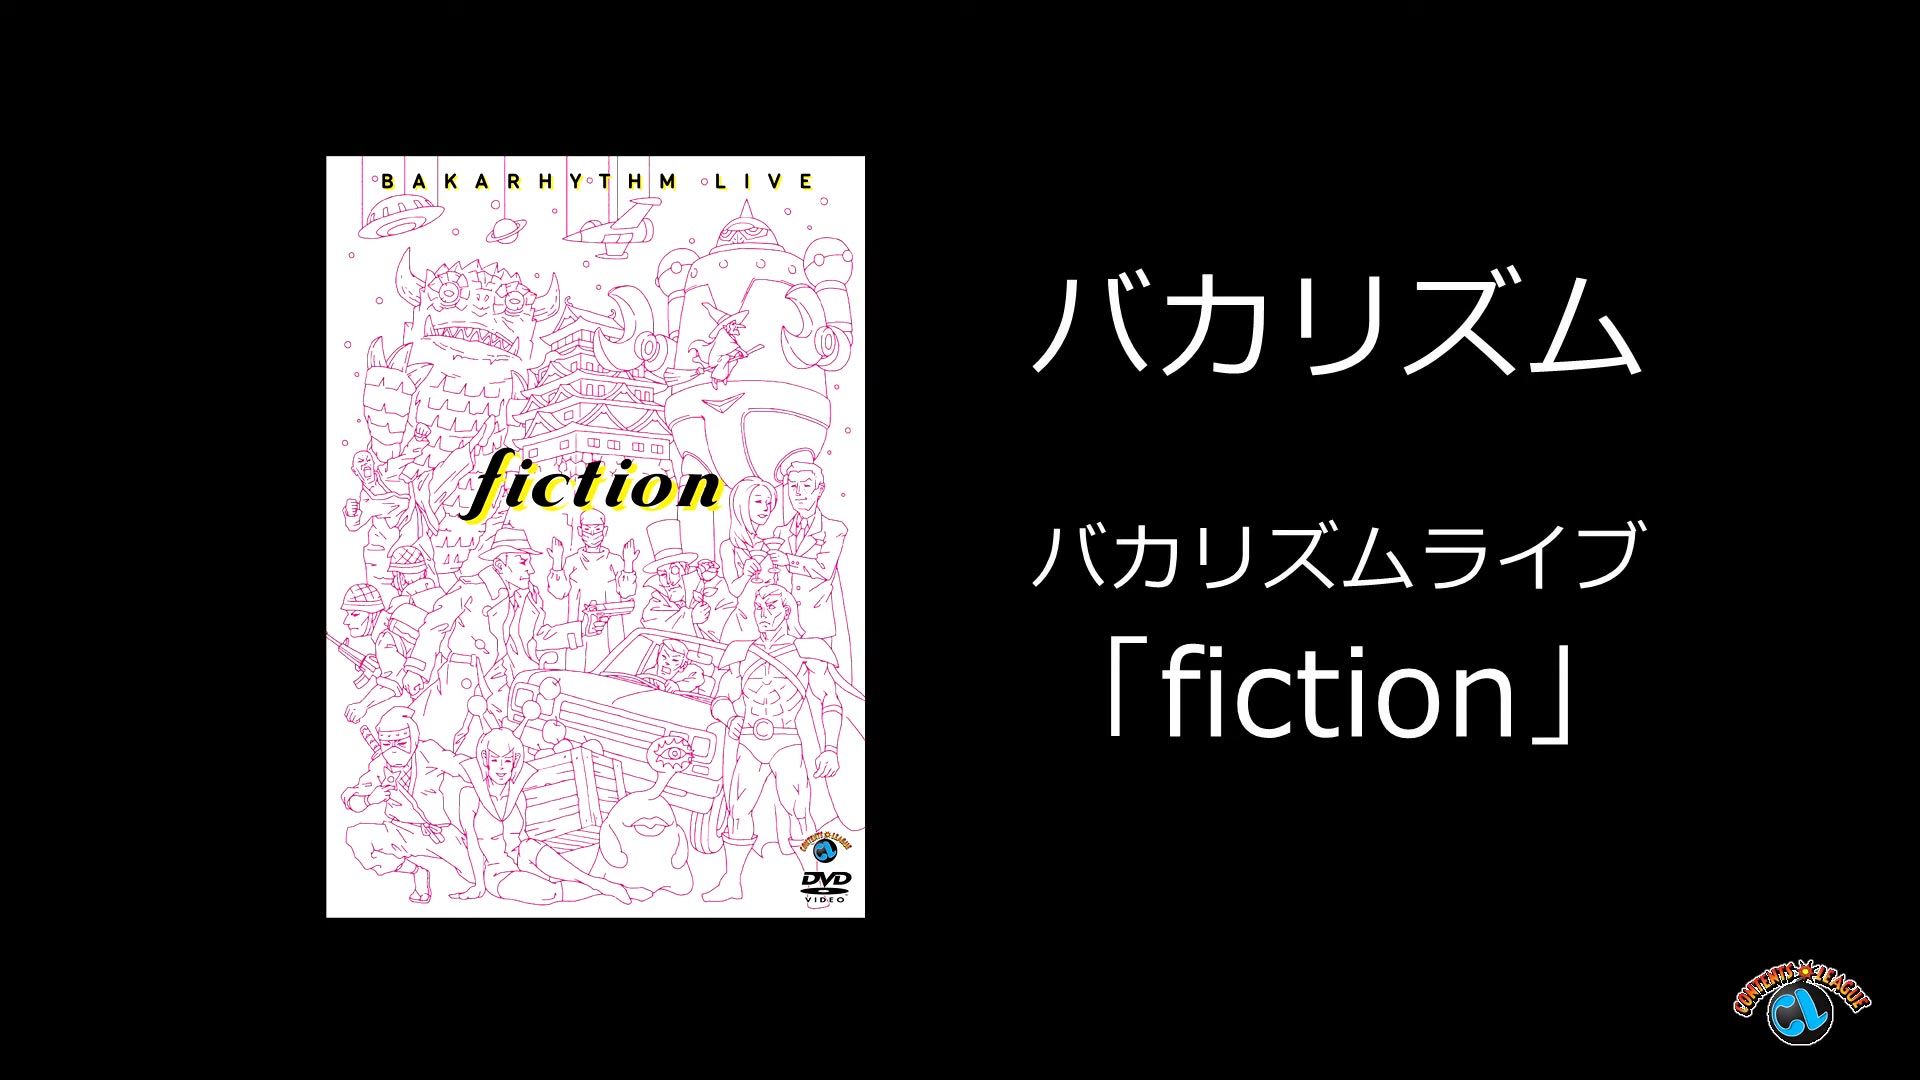 RAM RIDERが楽曲制作を担当したバカリズムライブ「fiction」DVDが11/8に発売 | RAM RIDER official website